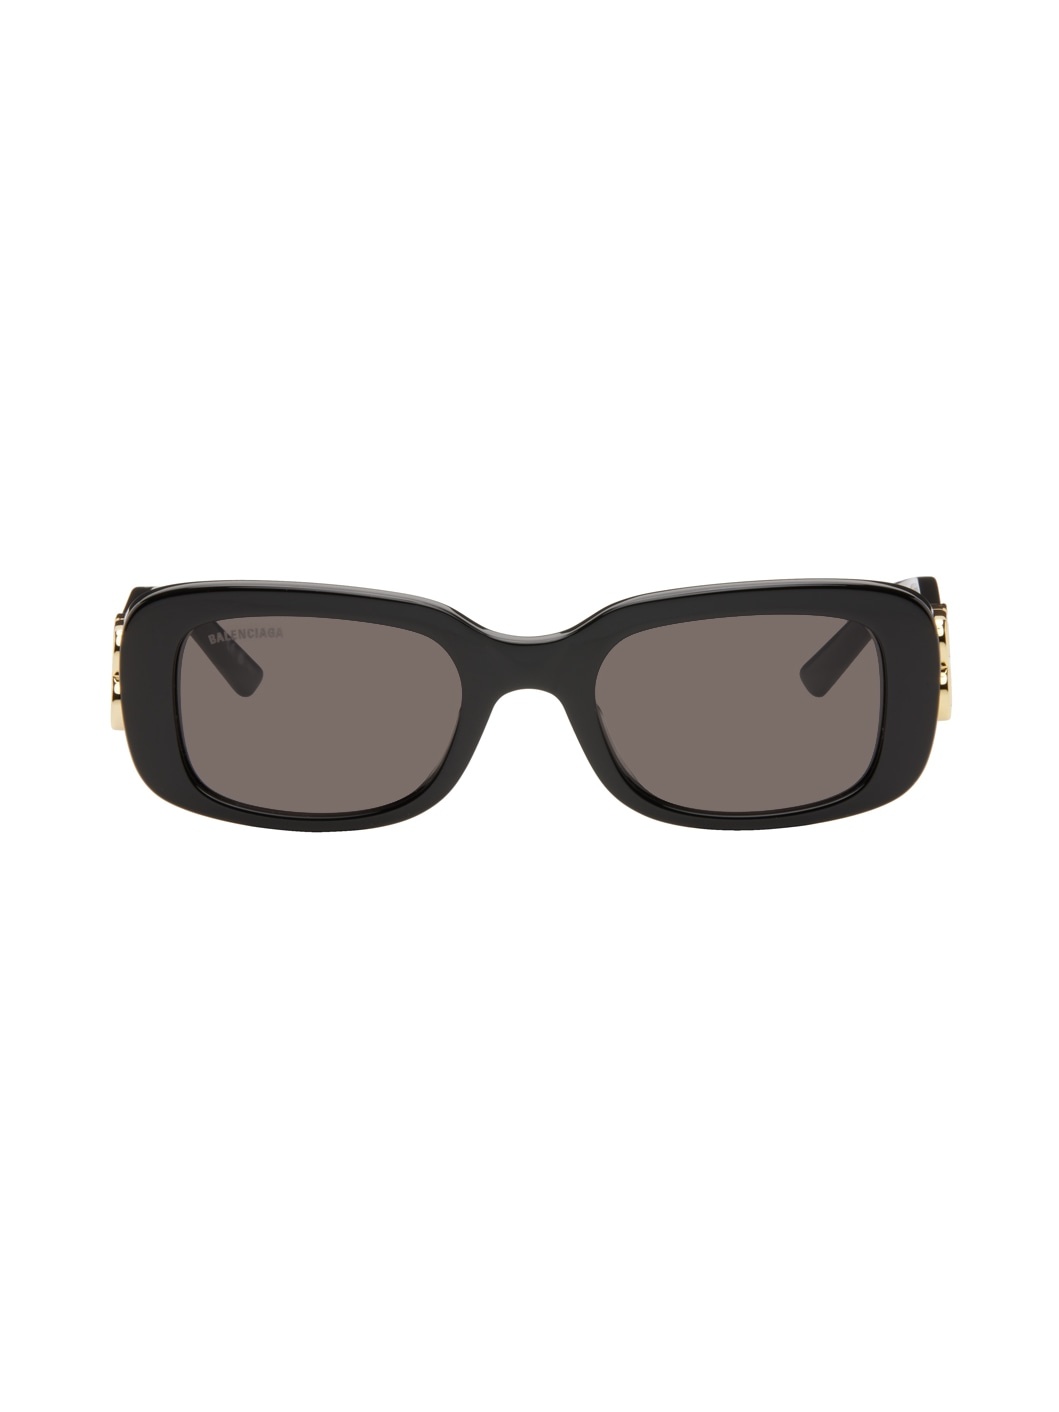 Black Dynasty Sunglasses - 1